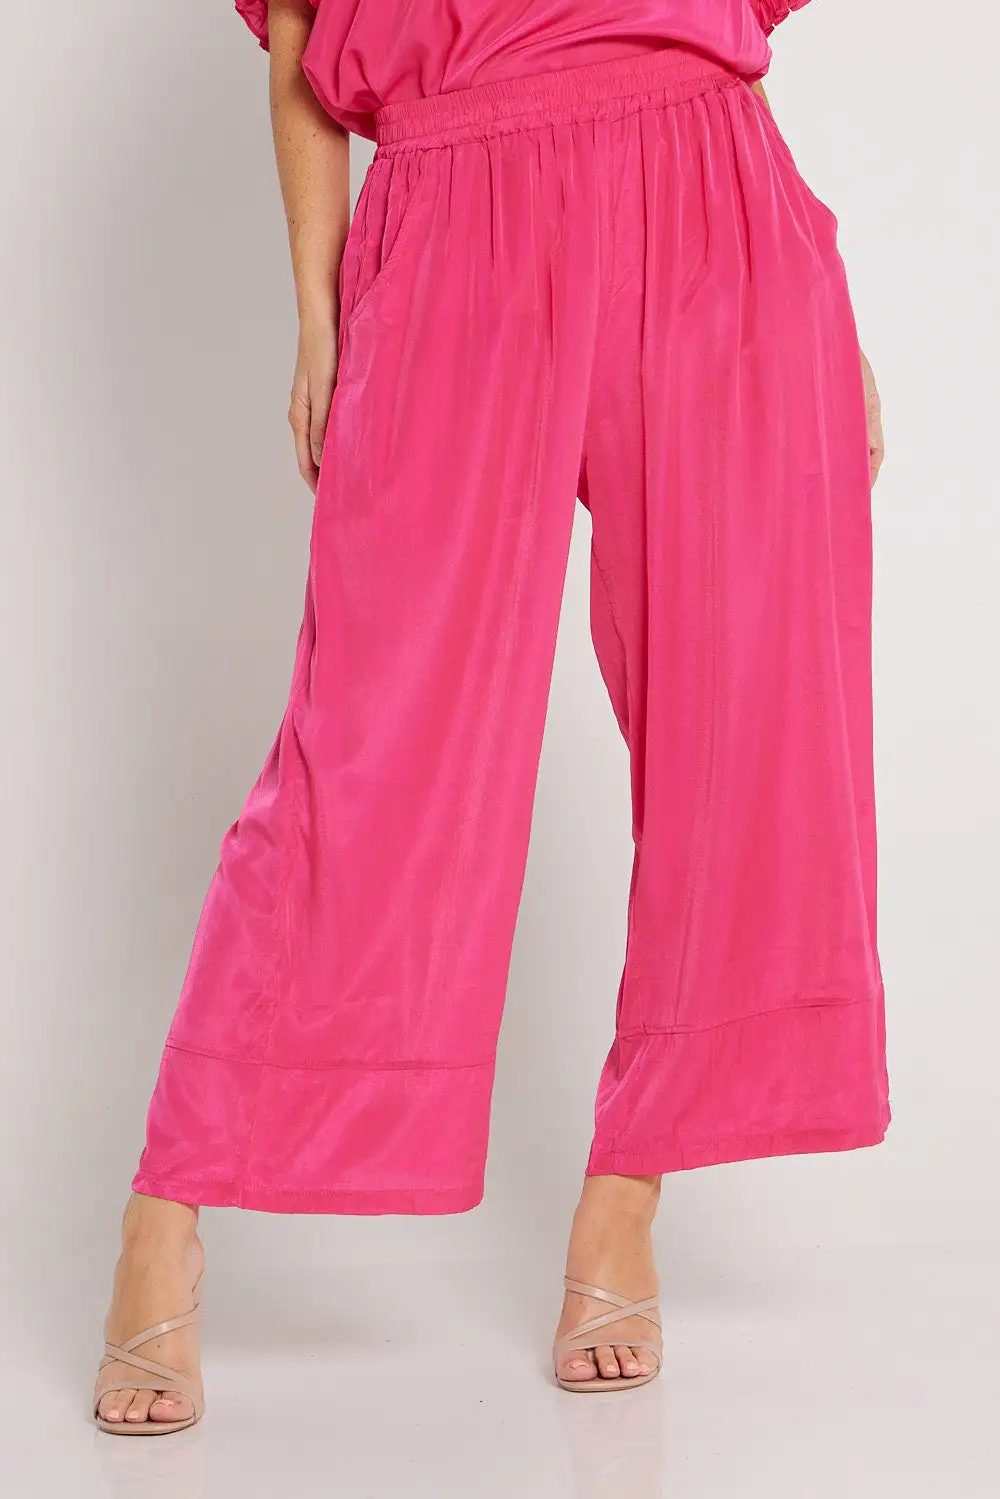 Robyn Pants - Hot Pink